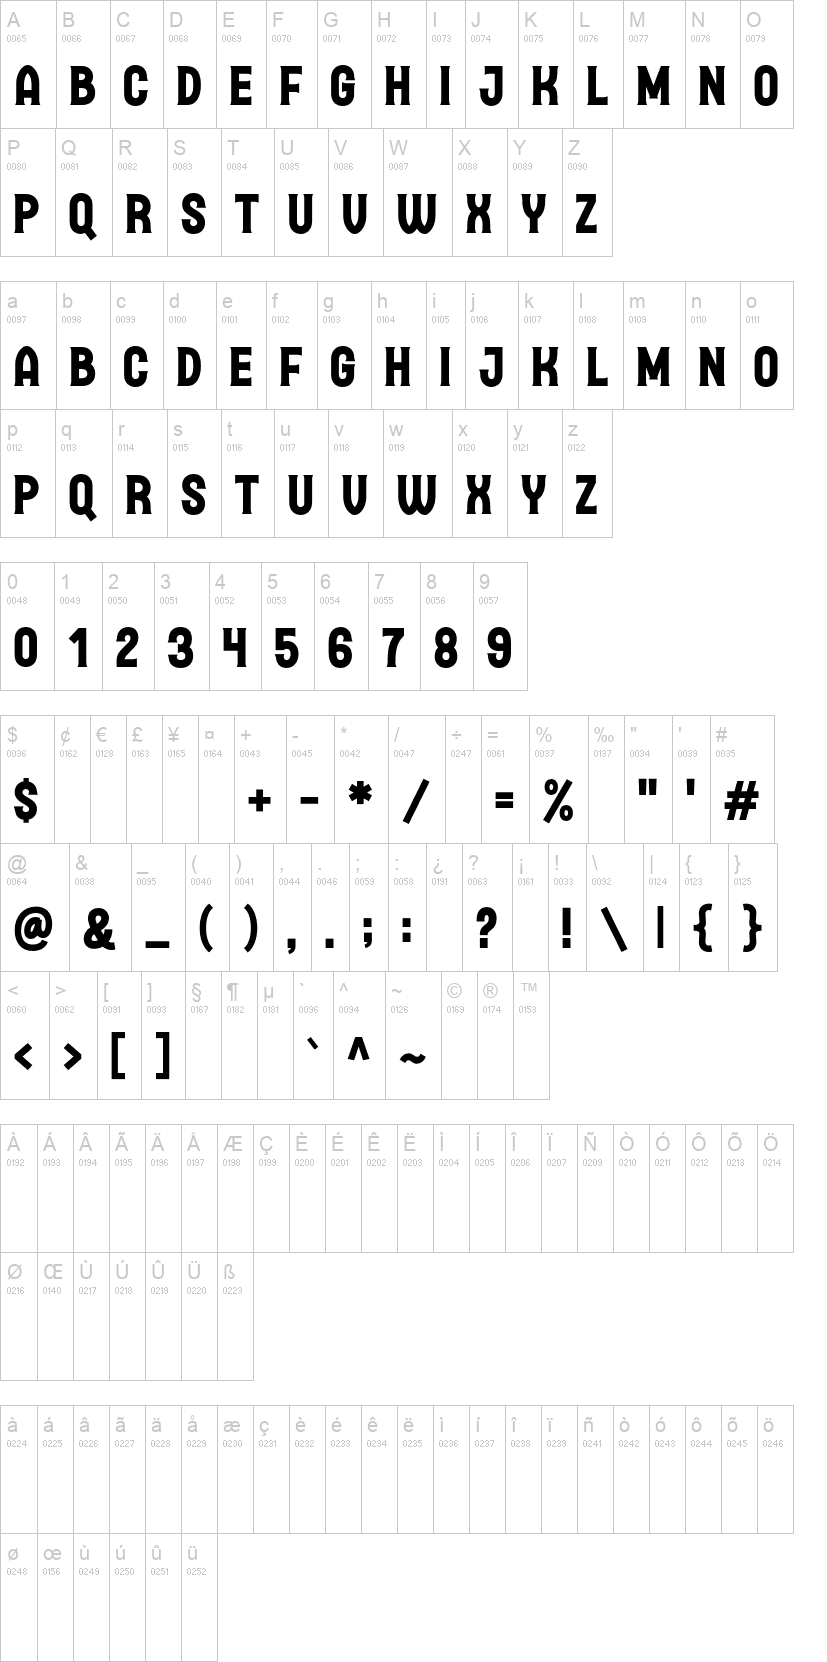 Brampton Serif